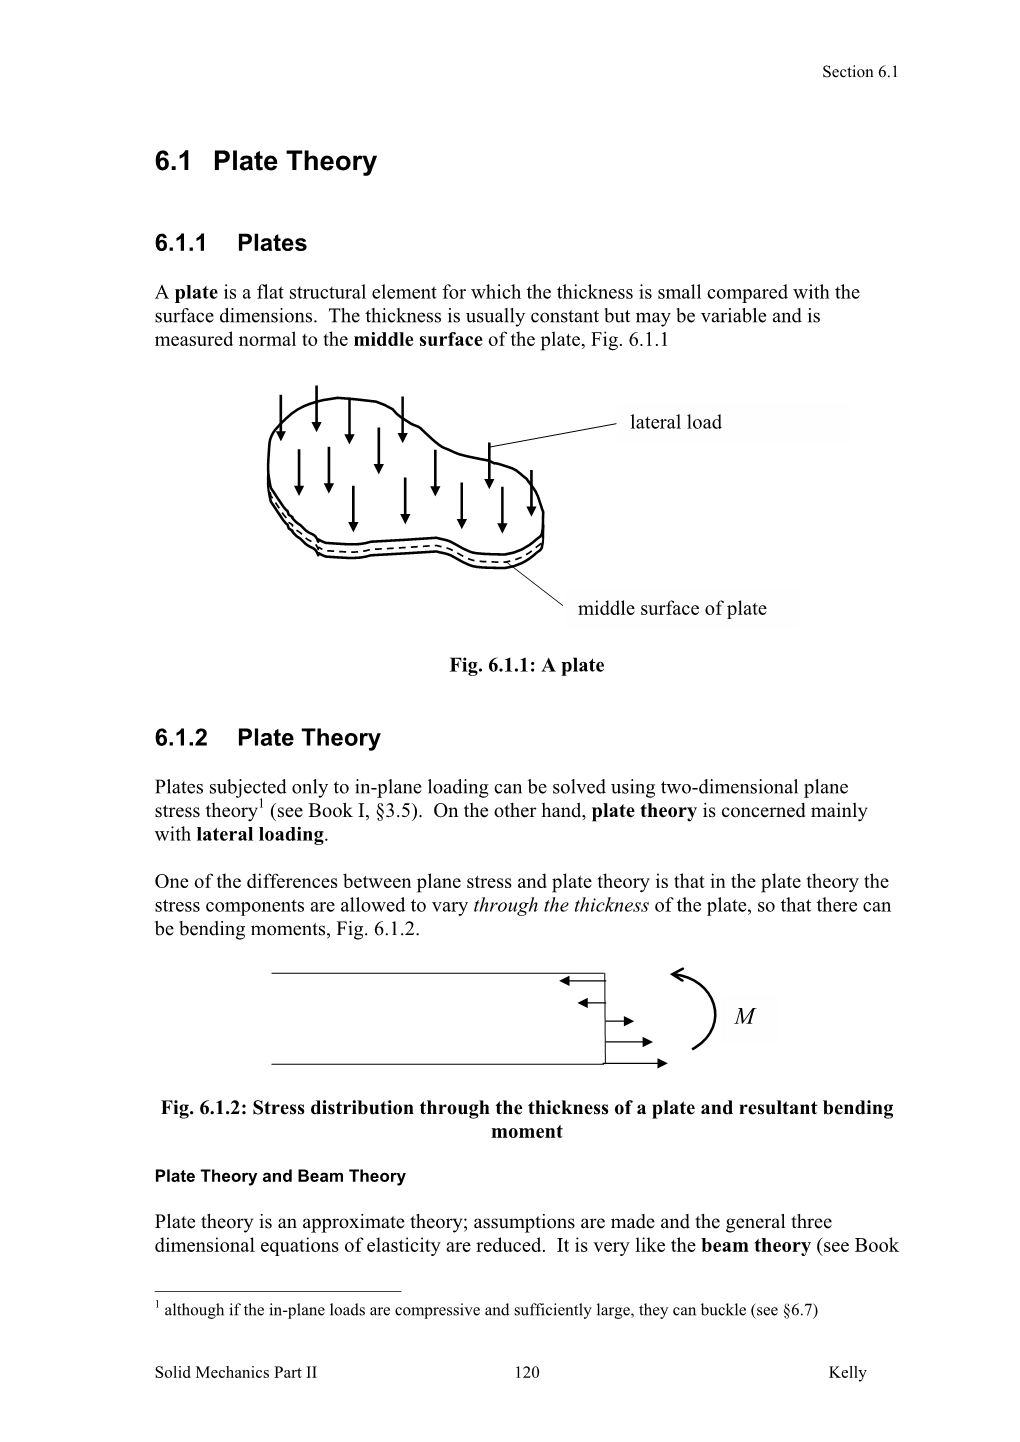 6.1 Plate Theory